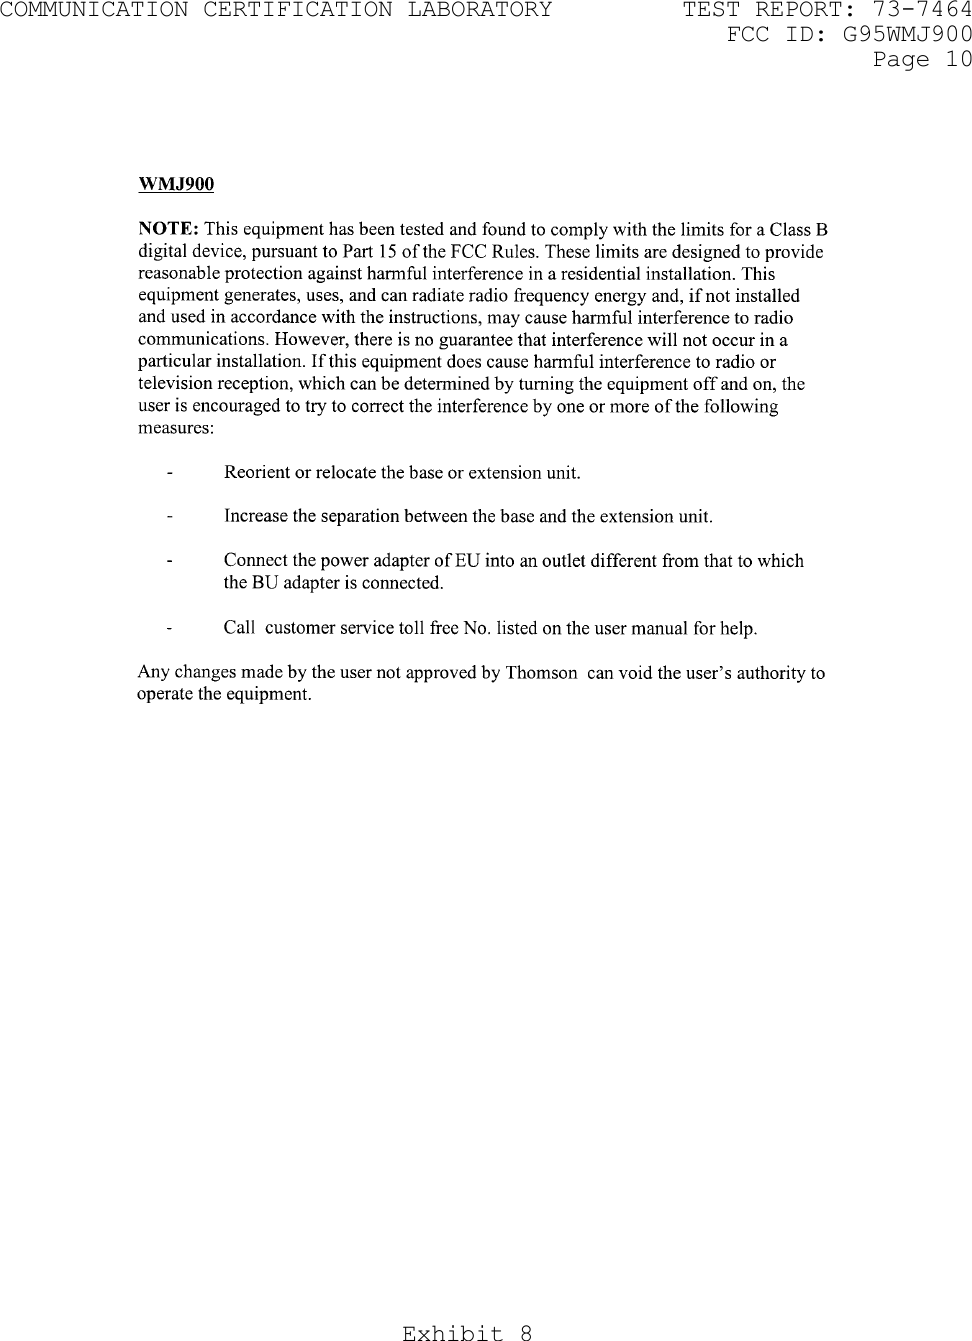 COMMUNICATION CERTIFICATION LABORATORY  TEST REPORT: 73-7464     FCC ID: G95WMJ900   Page 10 Exhibit 8    